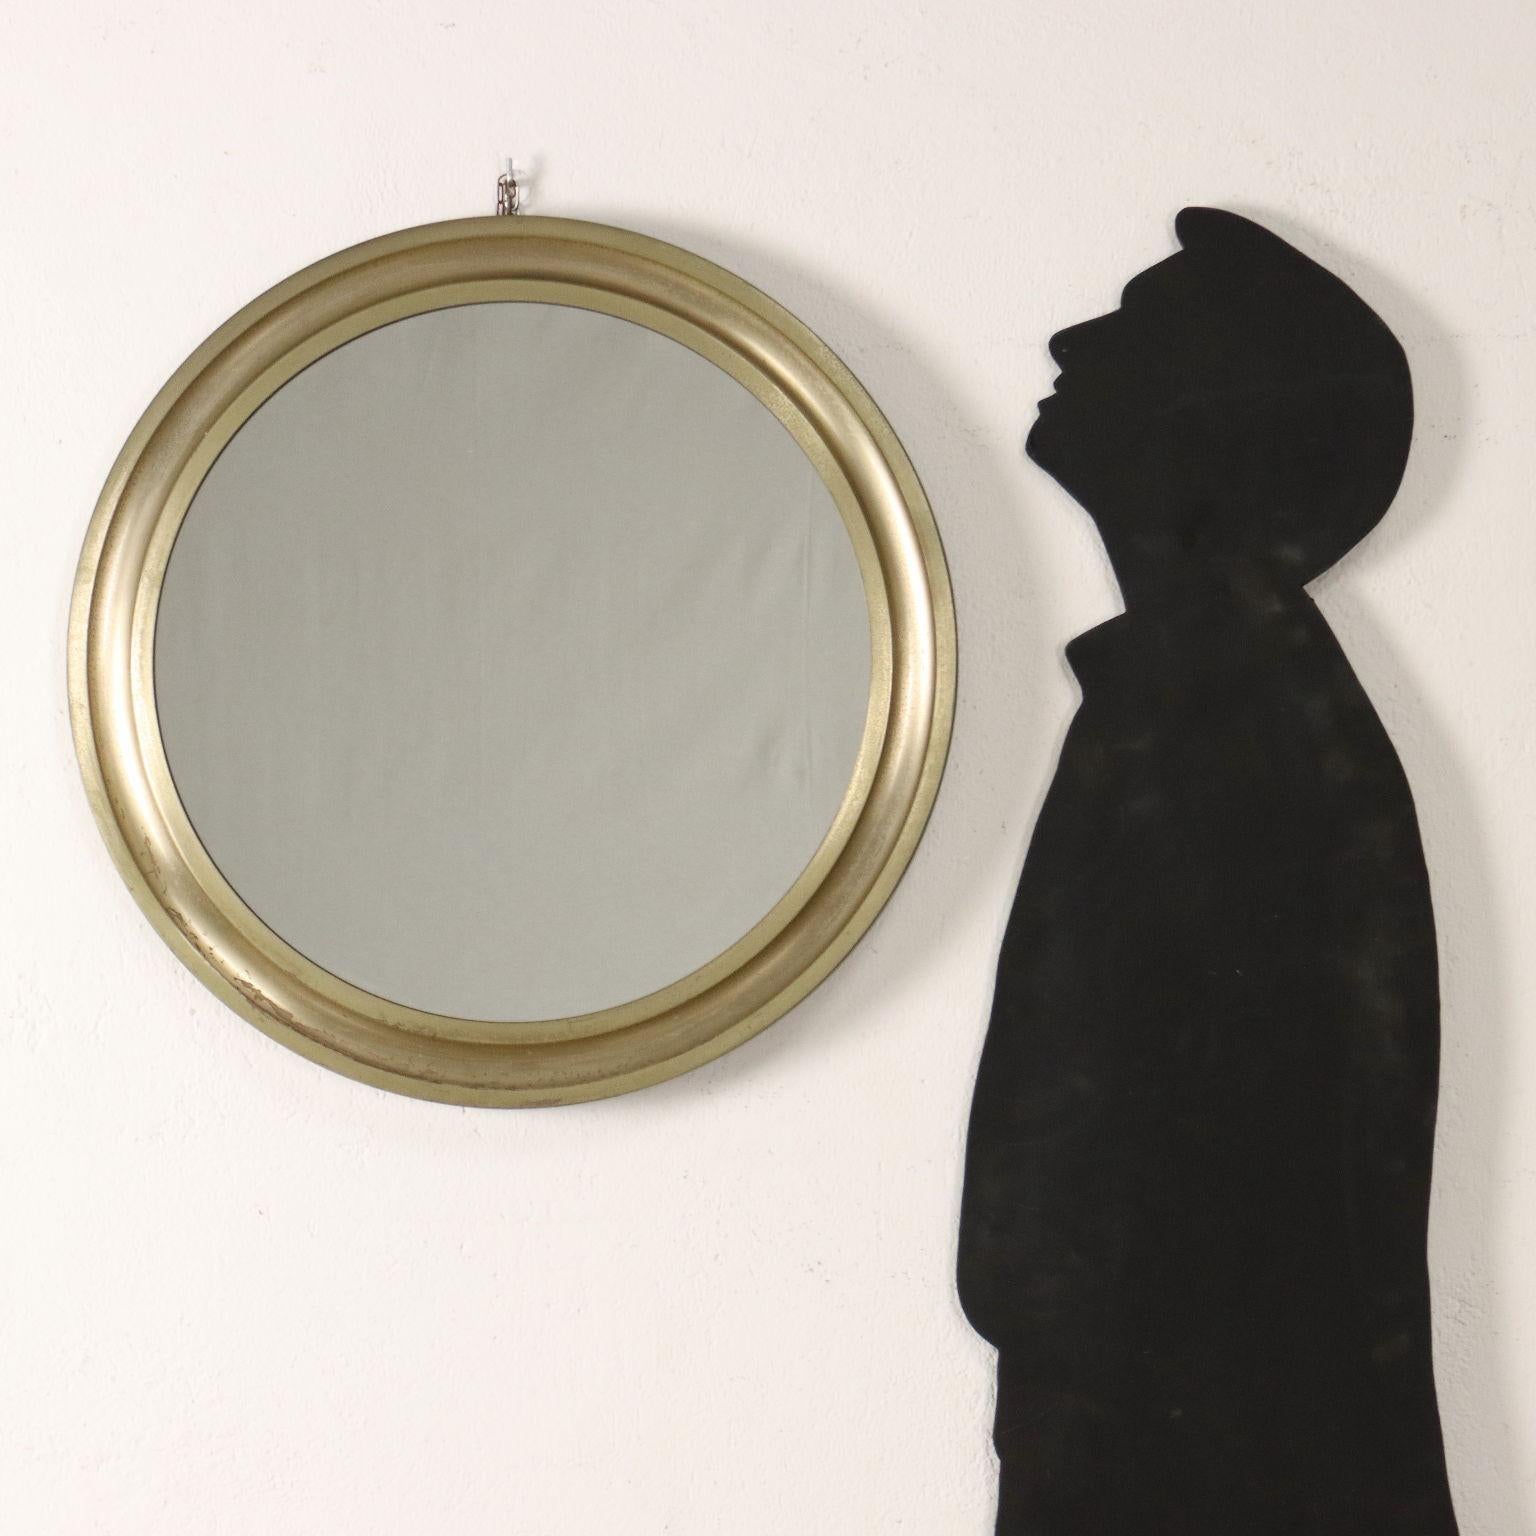 Mirror attributable to Sergio Mazza; chromed brass frame, mirrored glass.